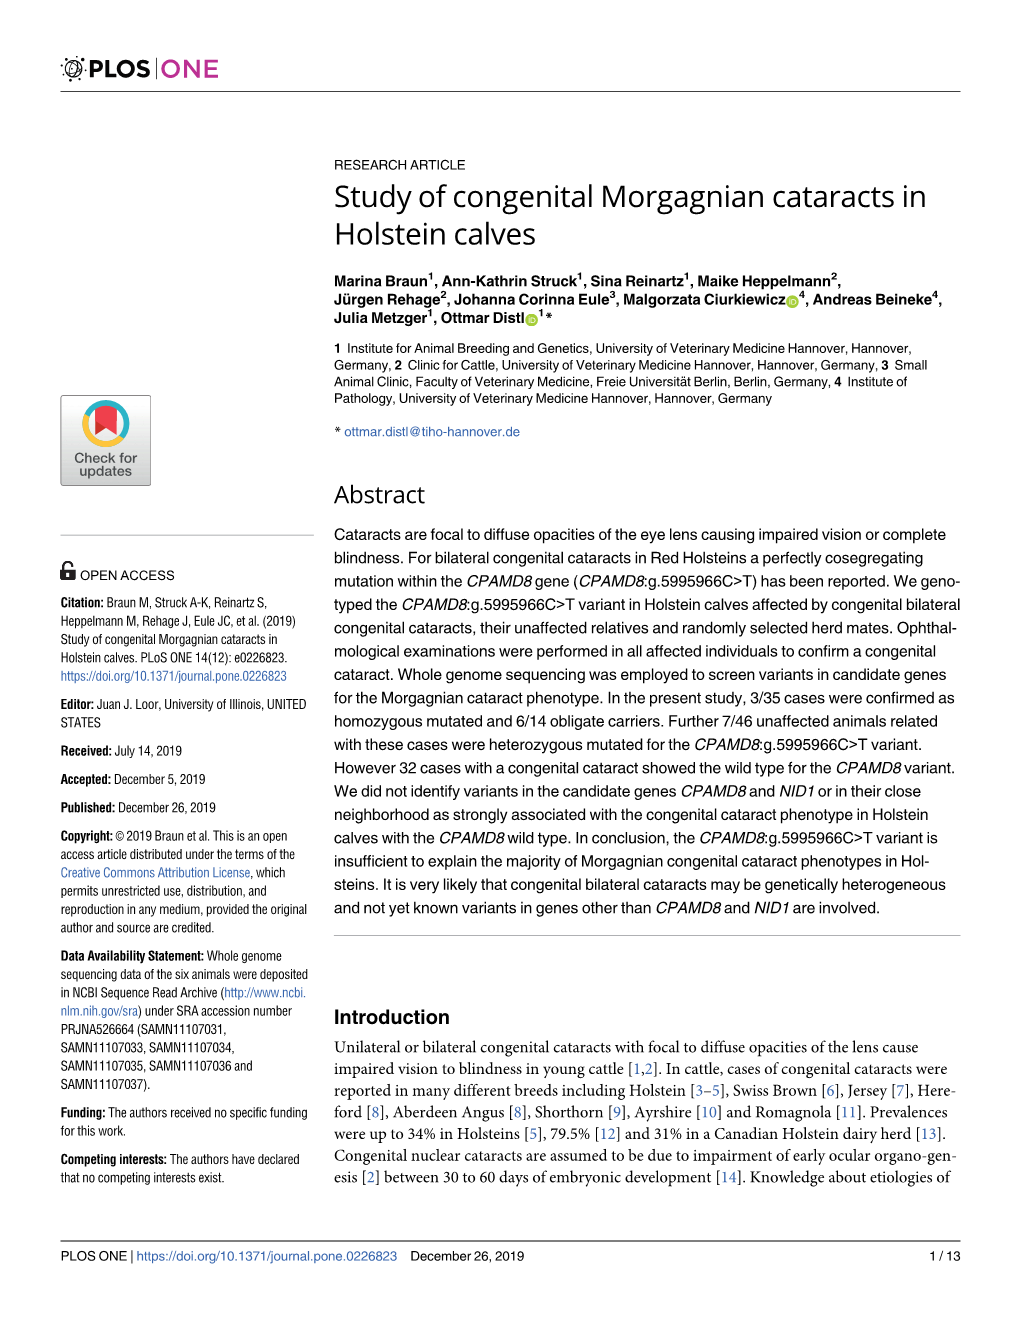 Study of Congenital Morgagnian Cataracts in Holstein Calves